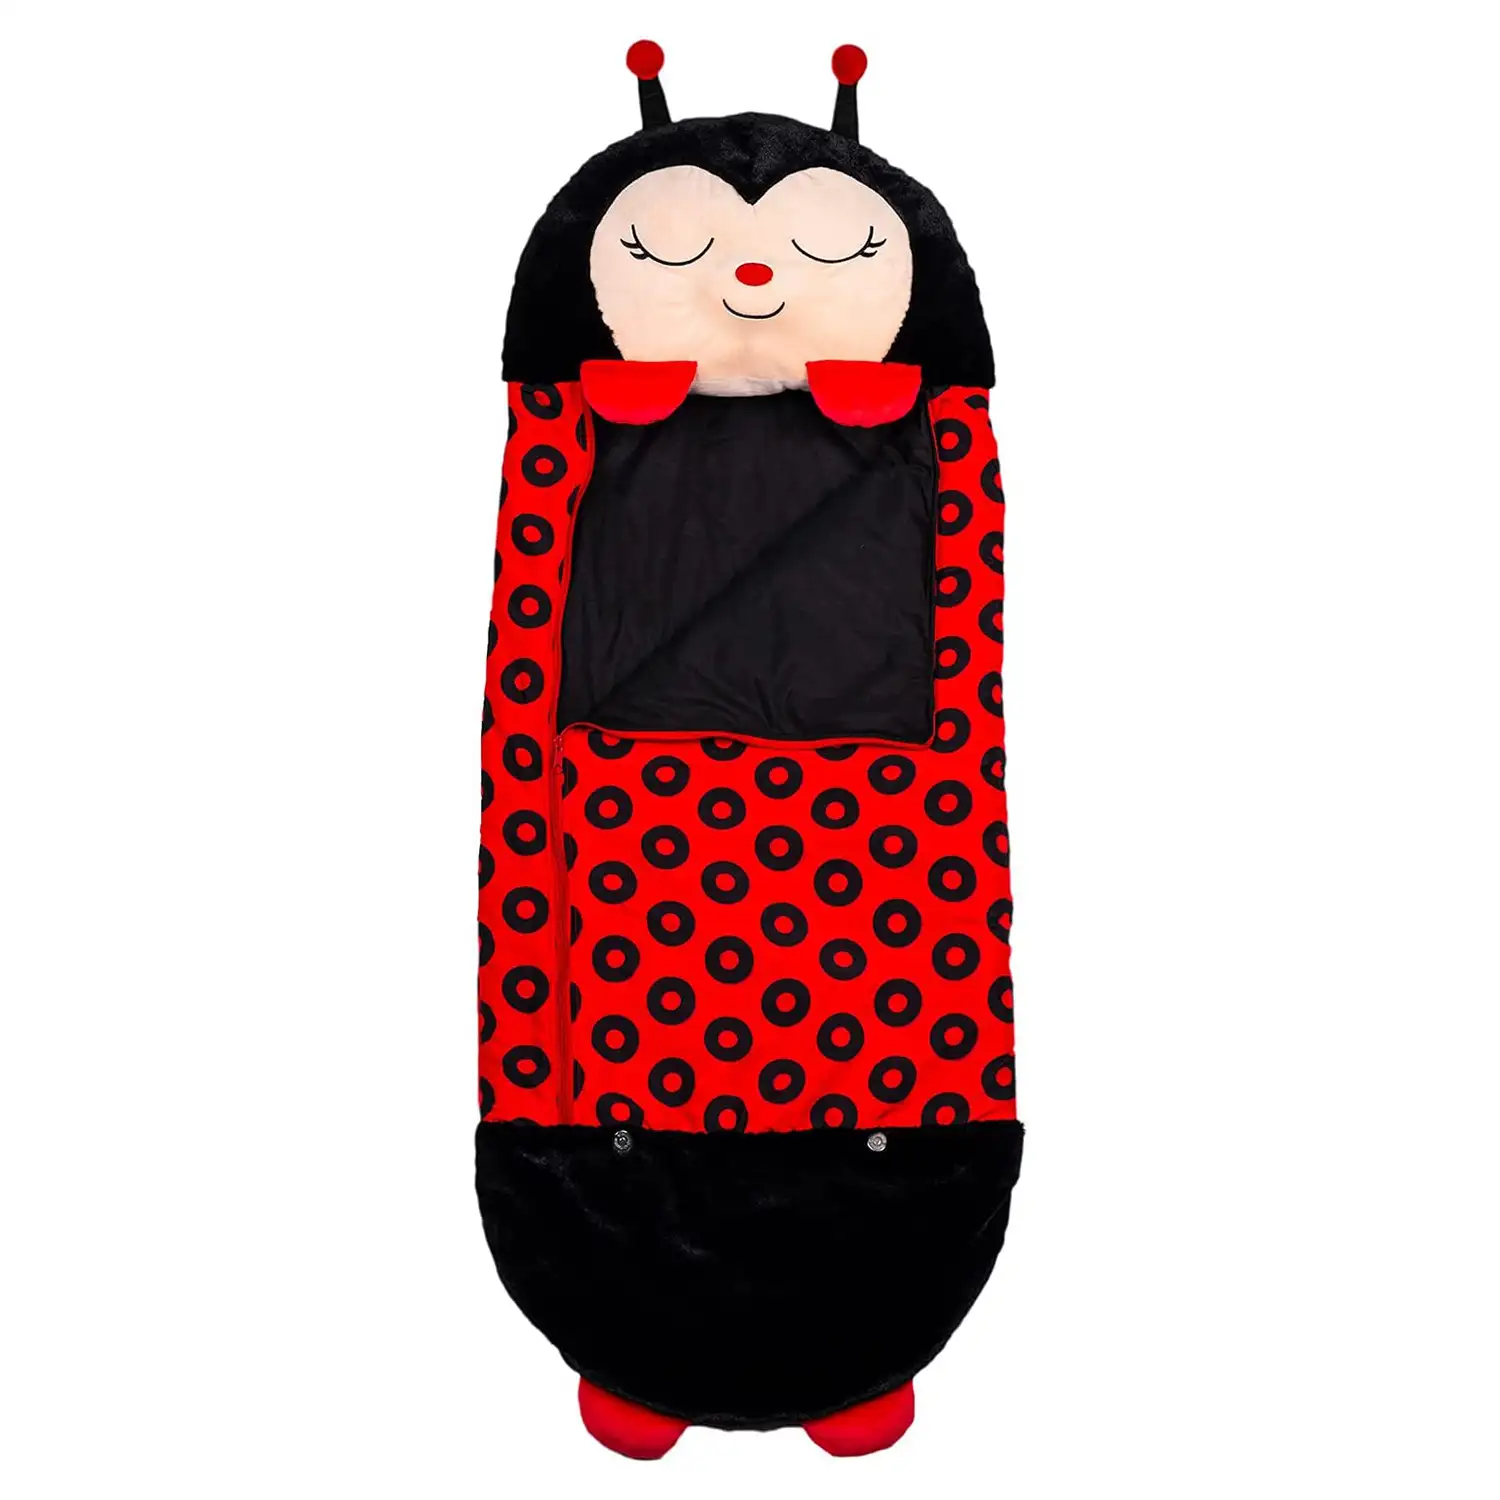 Saco de dormir convertible en almohada, para niños, Mariquita. Tacto peluche. Pequeño / S: 135x50cm.